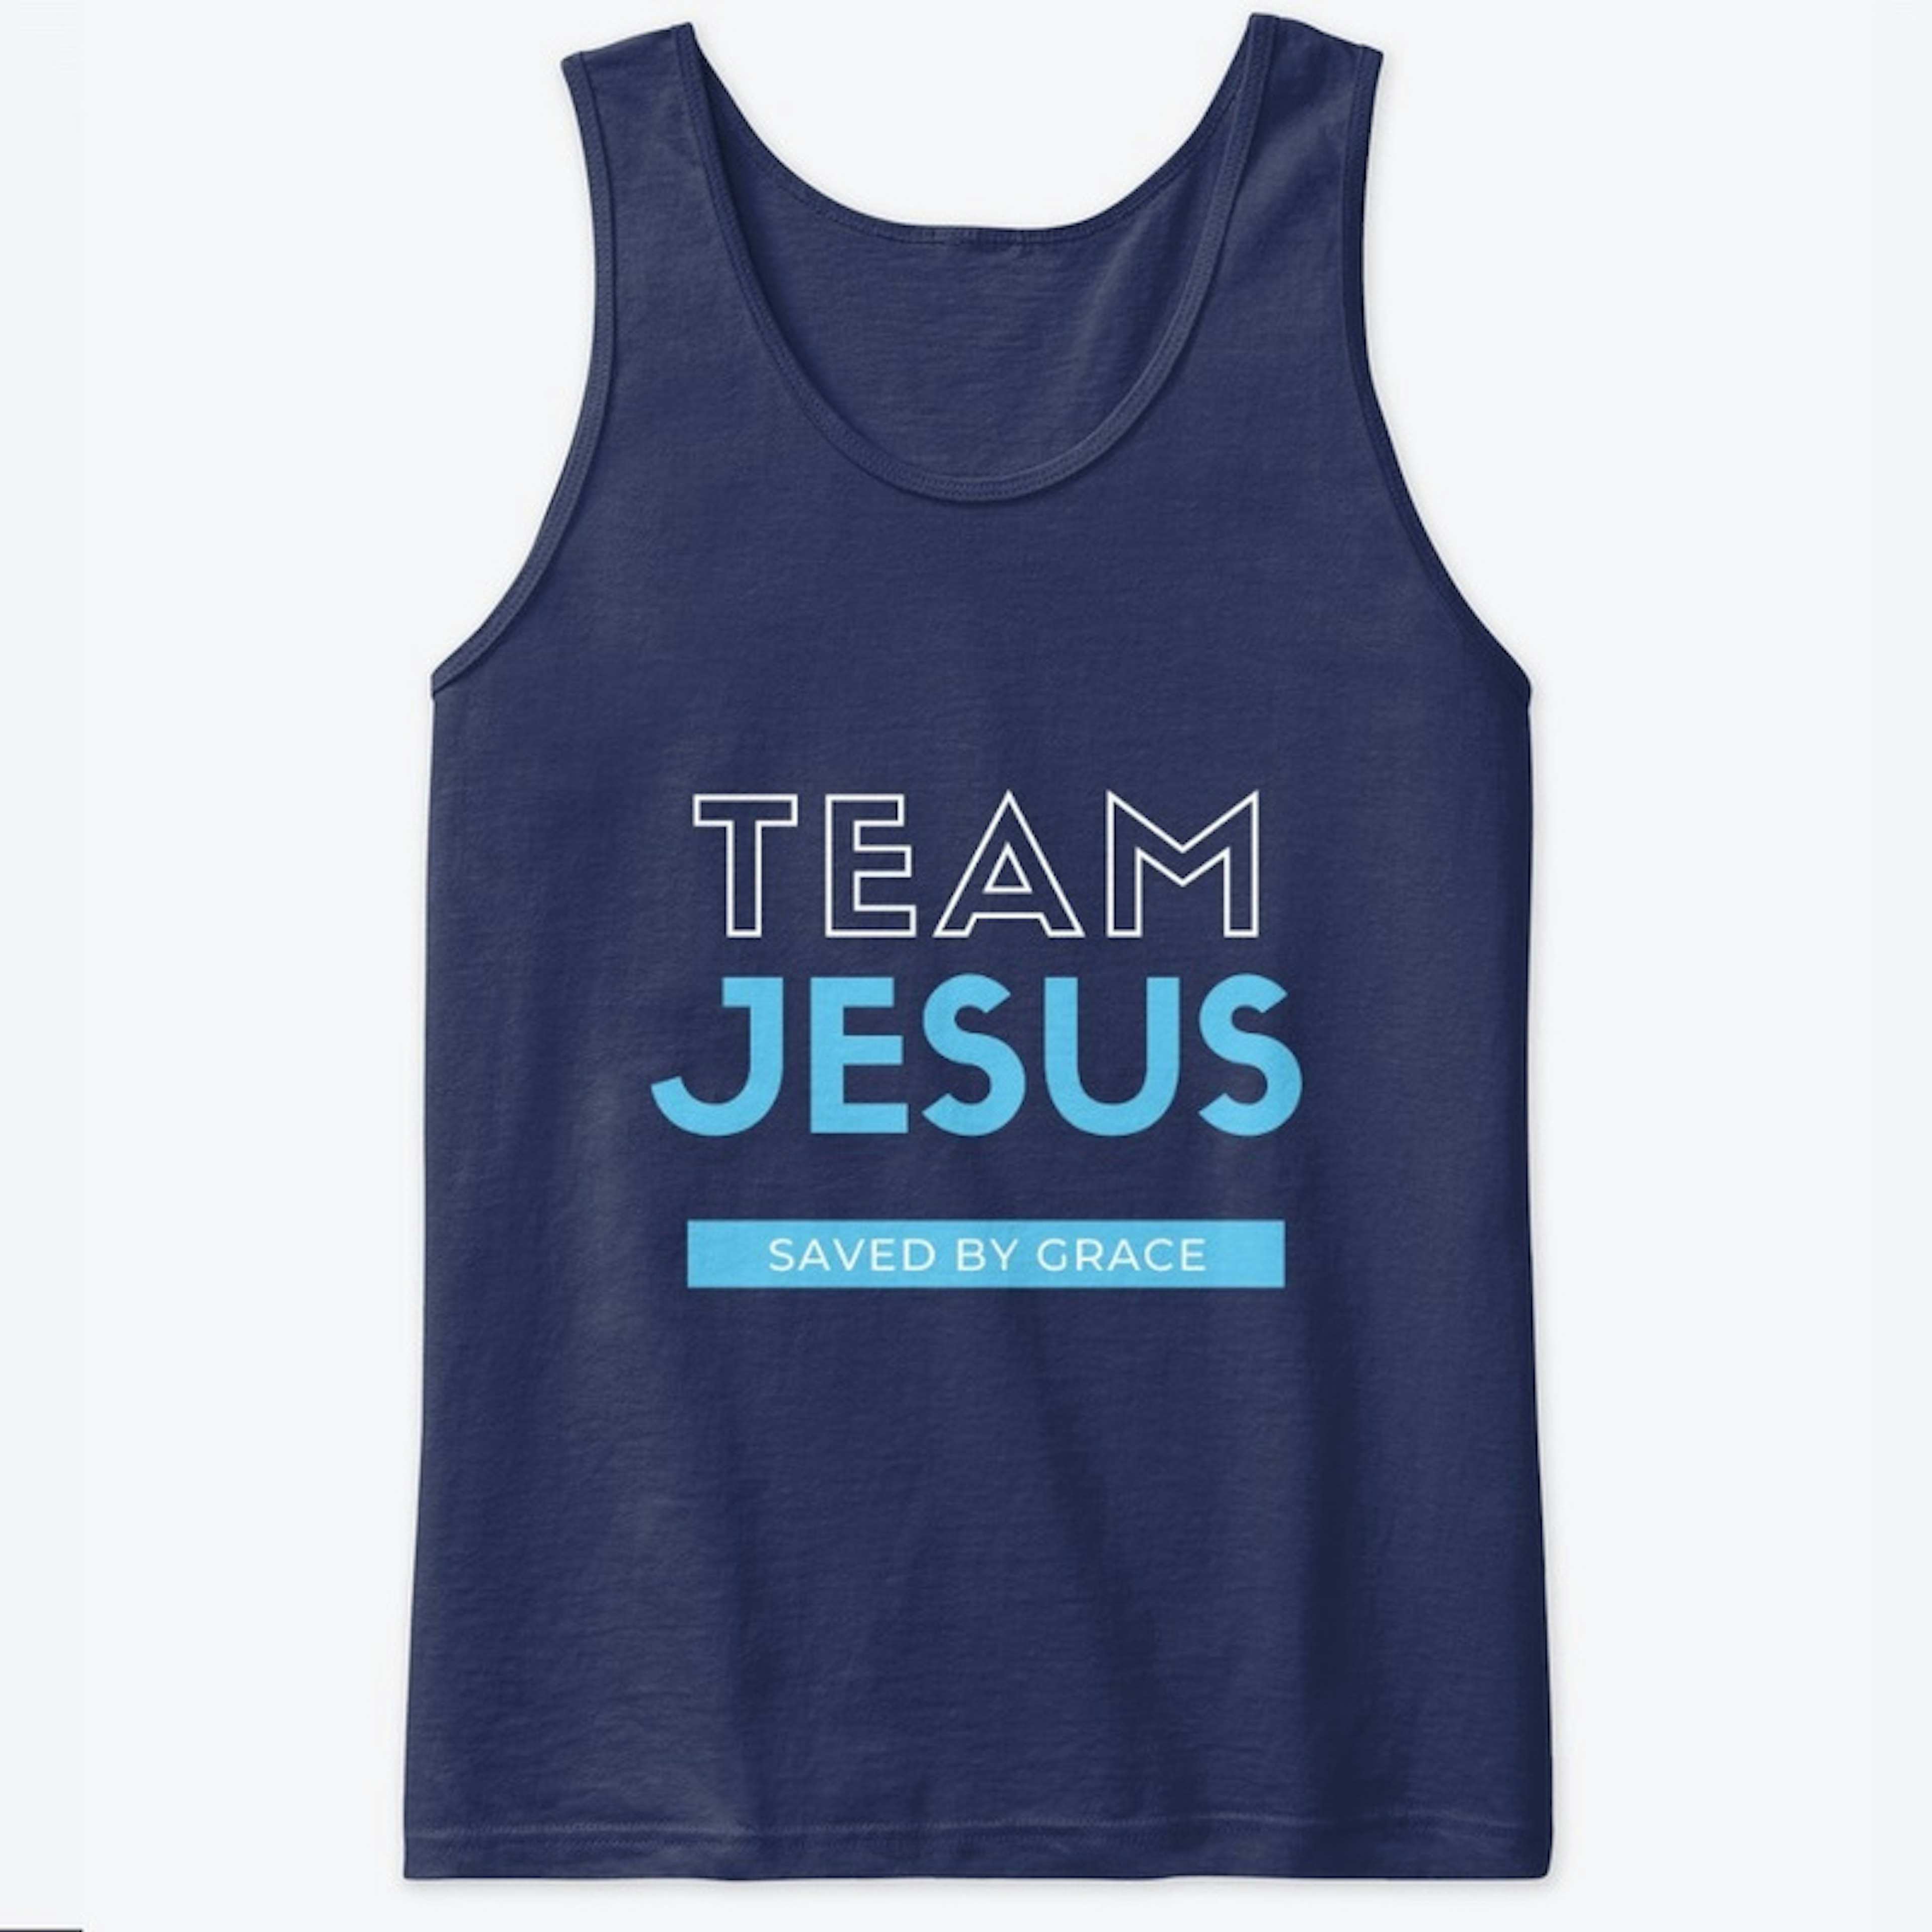 Team Jesus Saved by Grace